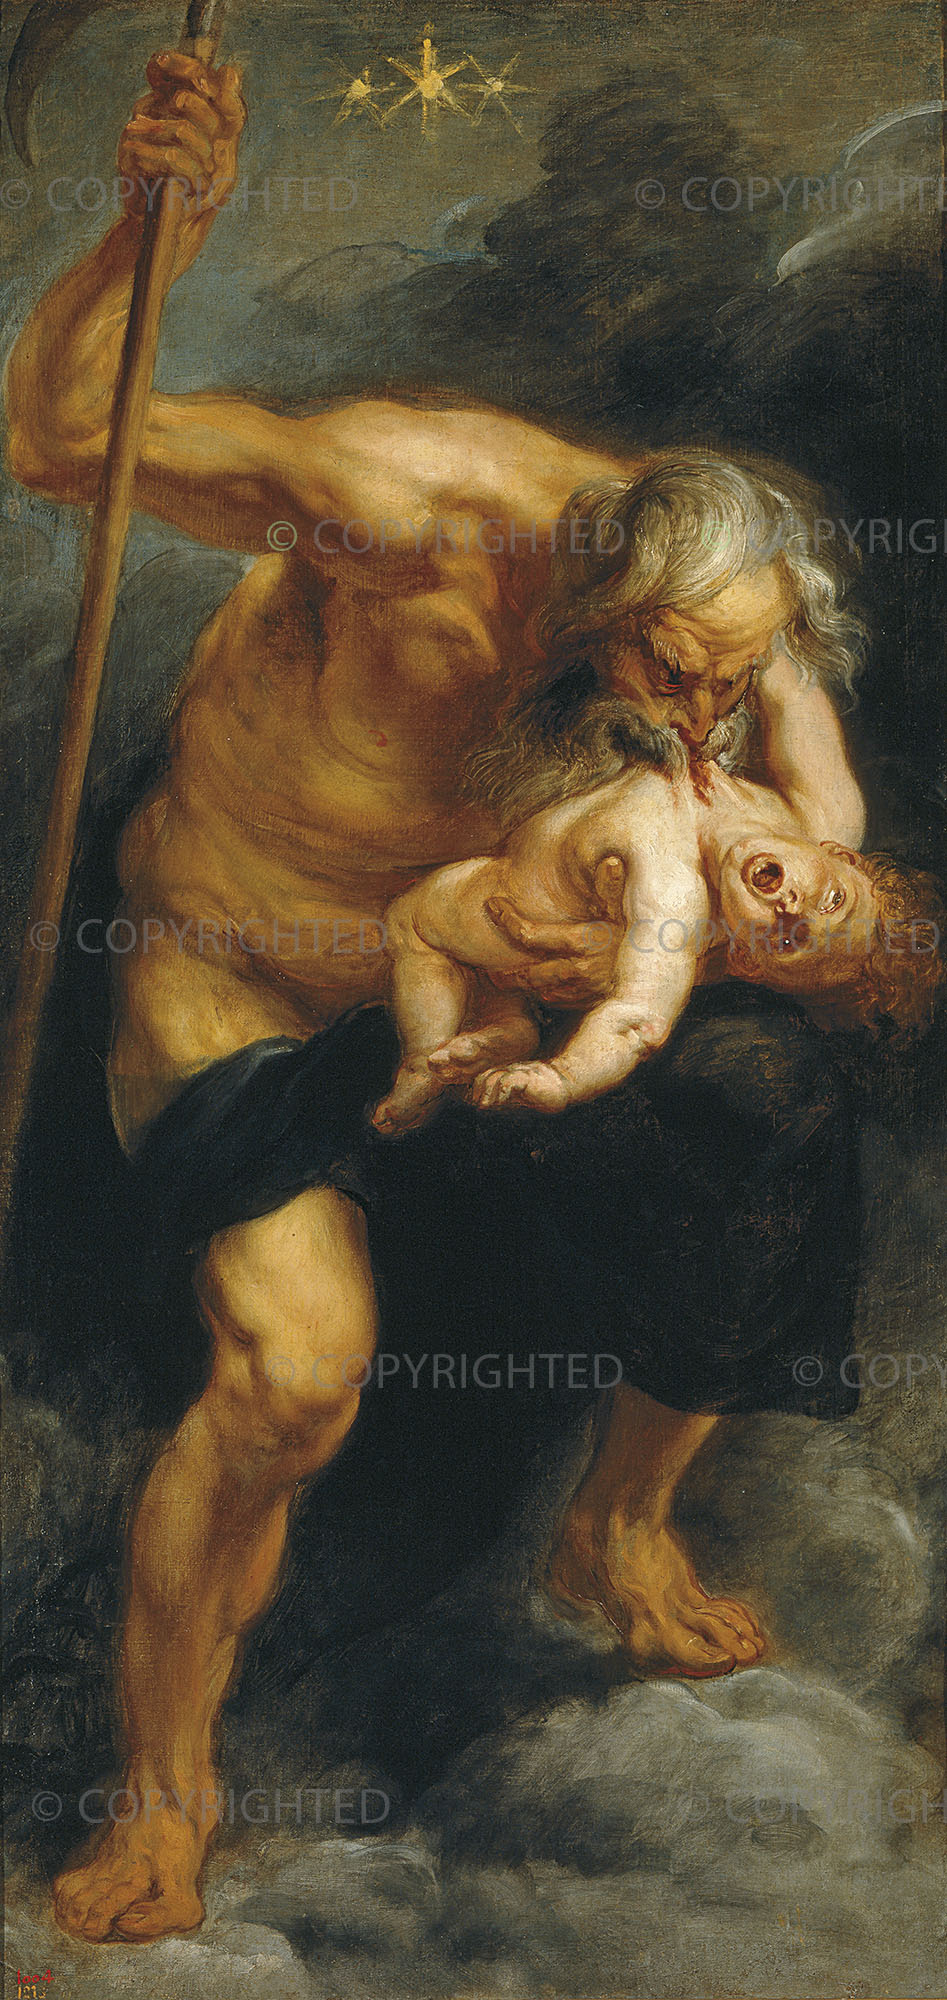 Peter Paul Rubens, Saturn devouring one of his children